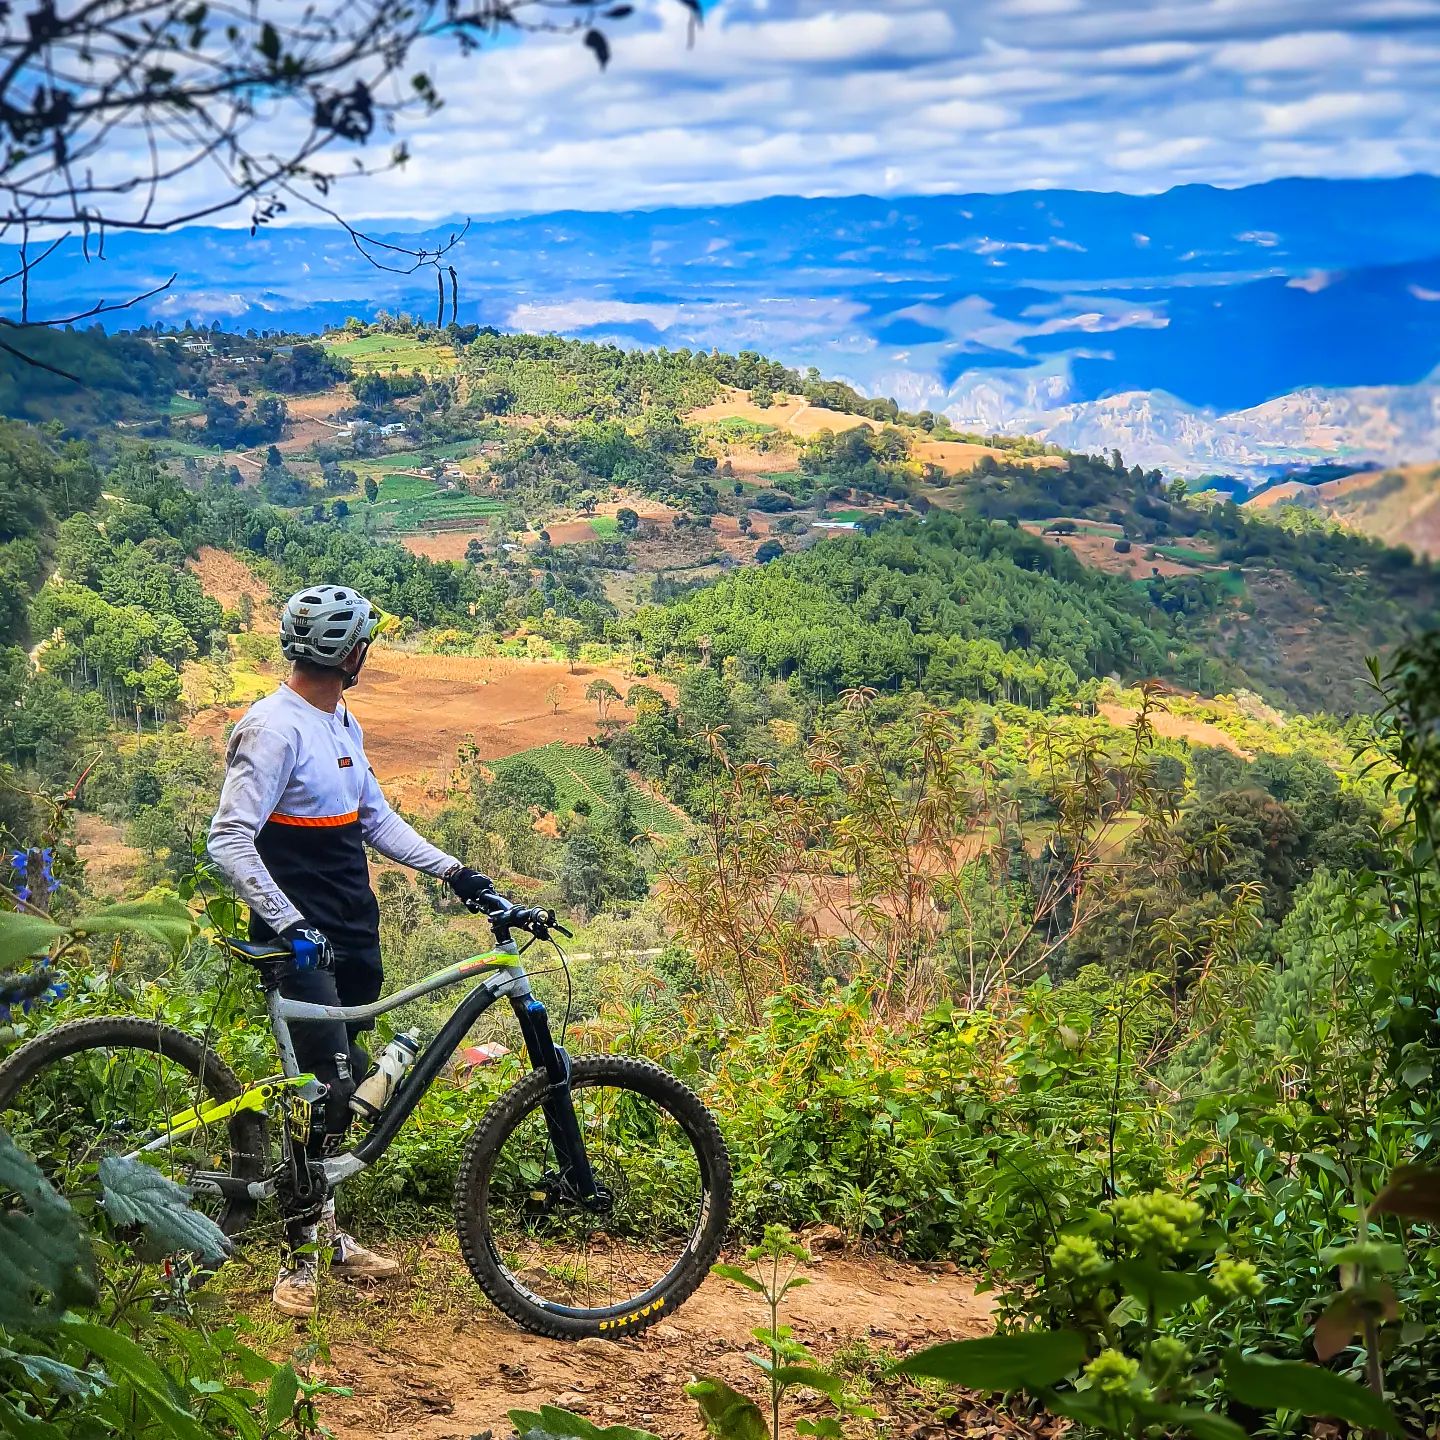 El otro lado de #tecpanguatemala 
.
Rutas hacia el río Motagua 

#mtblife #mtbtours #gorideyourbike #mtbtravel #mtbguide #biketours #visitguatemala #gorideyourbike #mountainbikeguatemala #mountainbiker #mtbphotooftheday #travelguatemala #enduromtb